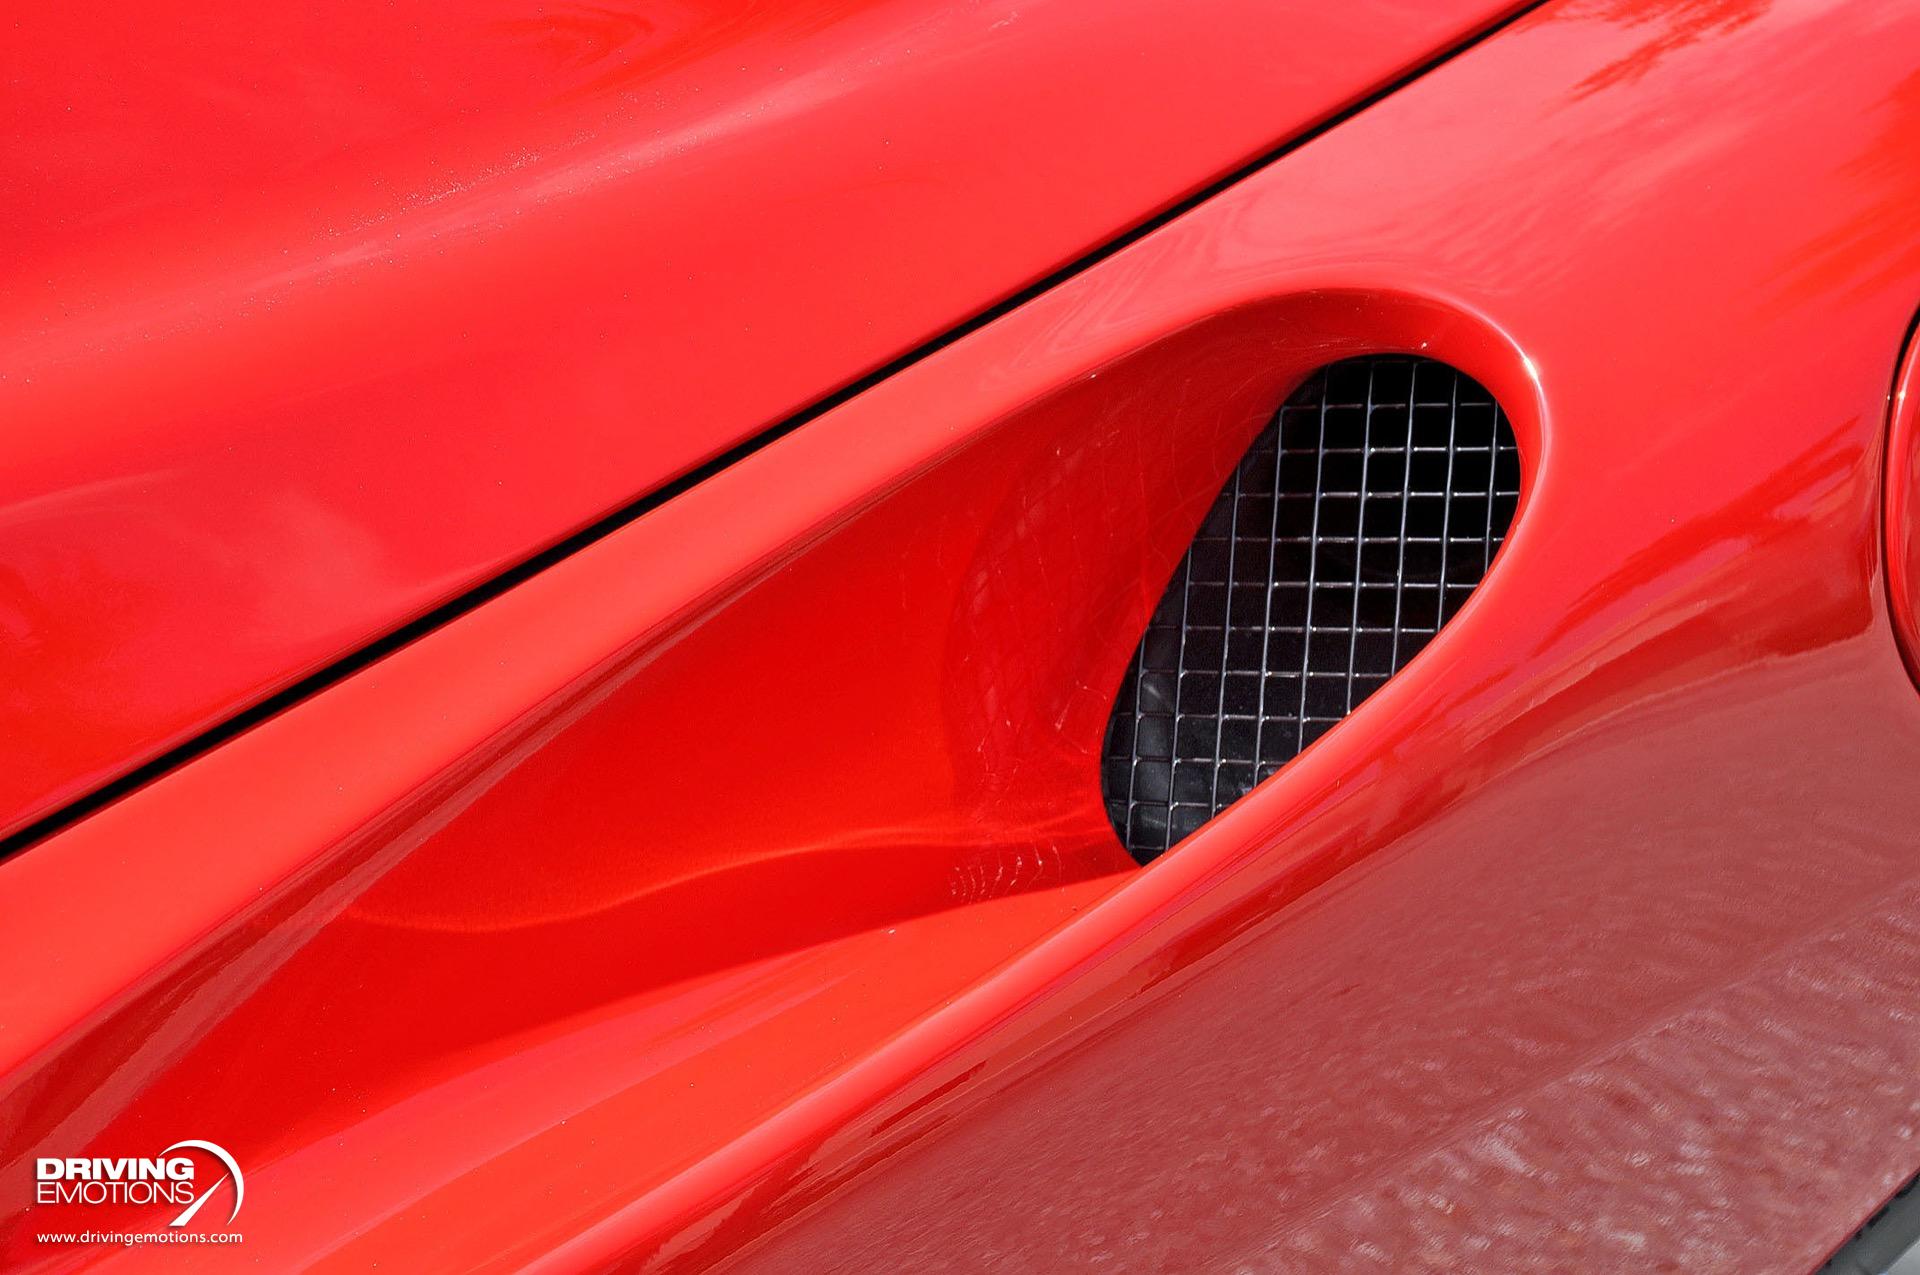 Used 2001 Ferrari 360 Spider F1 Spider RED/TAN! LOW MILES! | Lake Park, FL